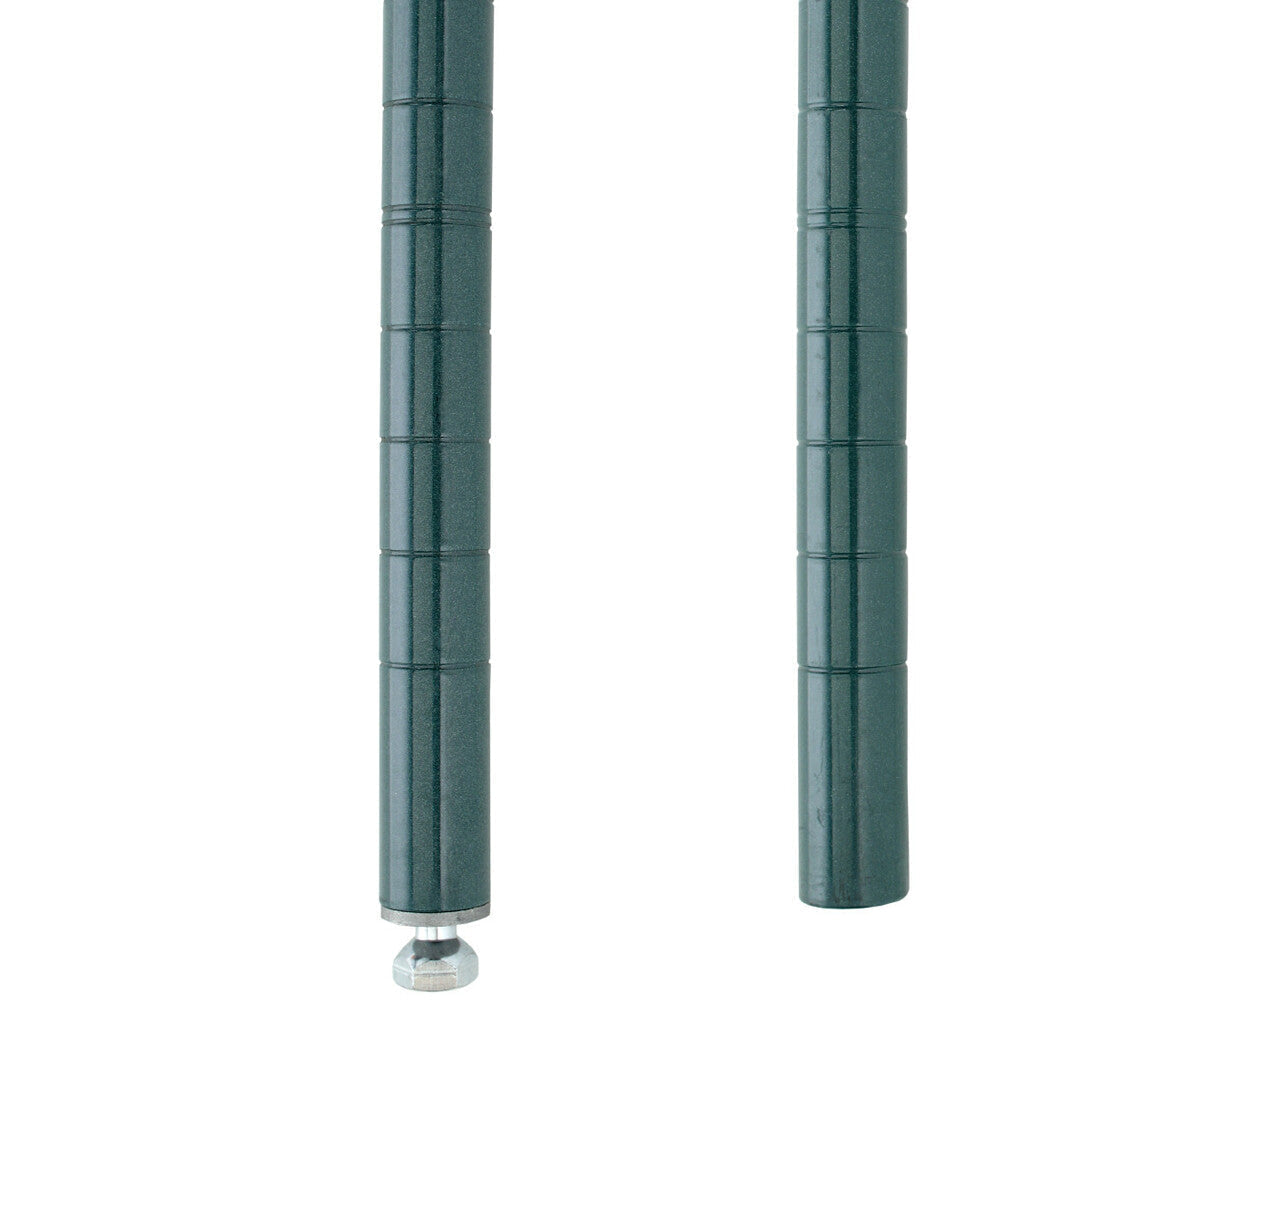 Metro Super Erecta 4-Shelf Industrial Wire Shelving Unit, Metroseal Green Epoxy (183 x 61 x 180 CM)